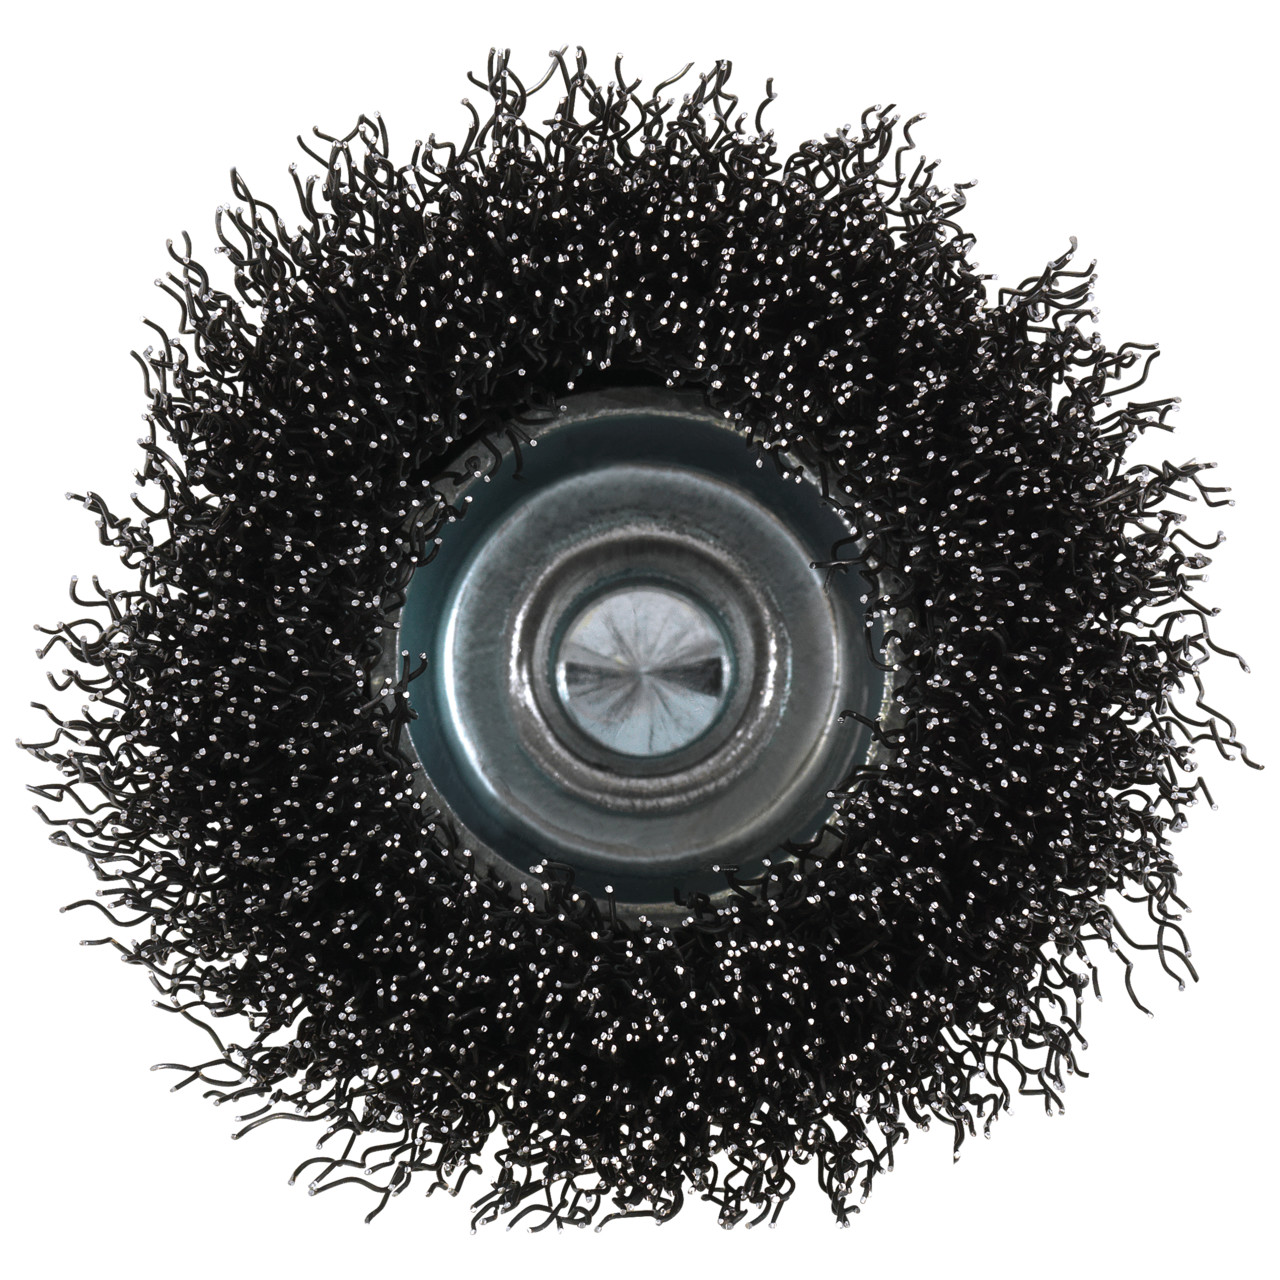 Tyrolit Cepillos de eje de vaso DxLxH-GExI 60x15x20-6x30 Para acero, forma: 52TDW - (cepillos de eje de vaso), Art. 890763